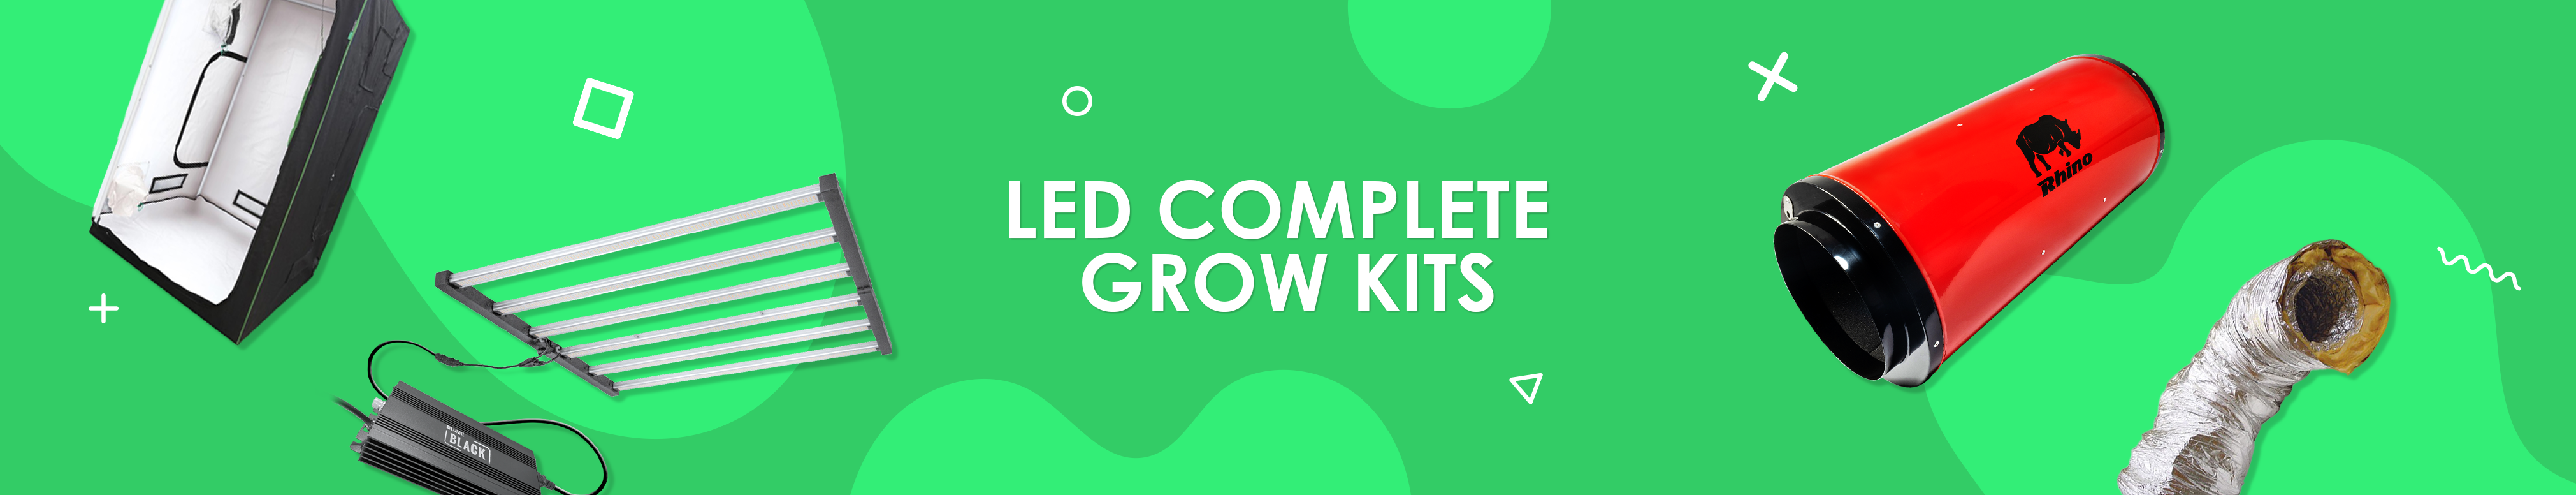 LED Complete Grow Kits